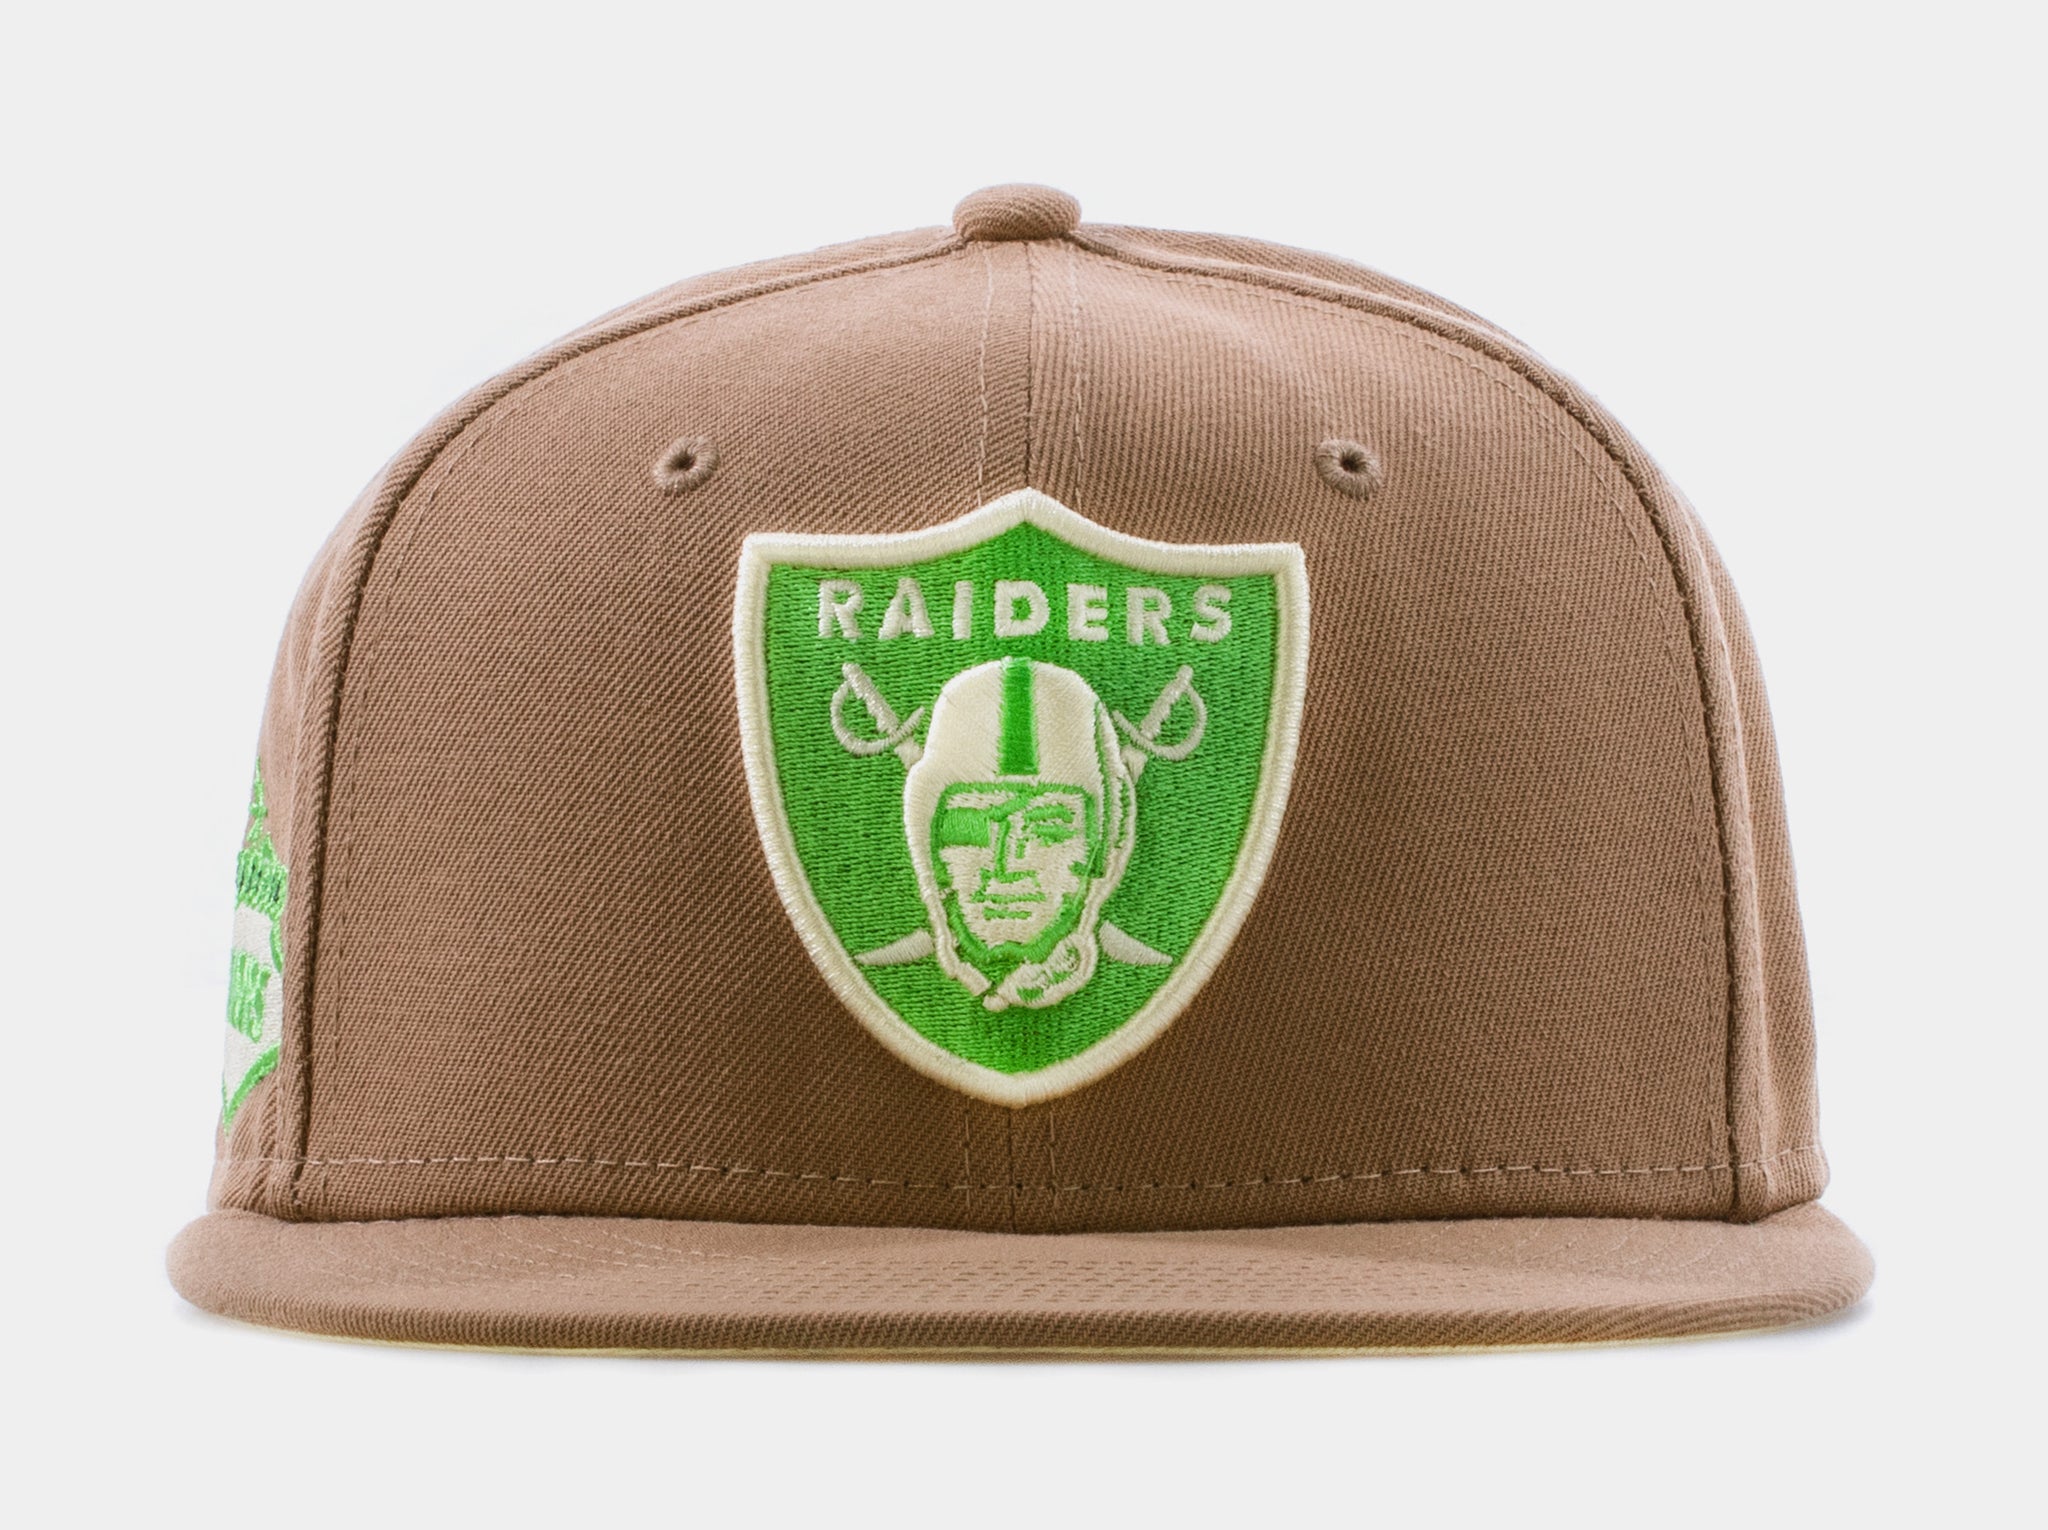 Las Vegas Raiders Hat 